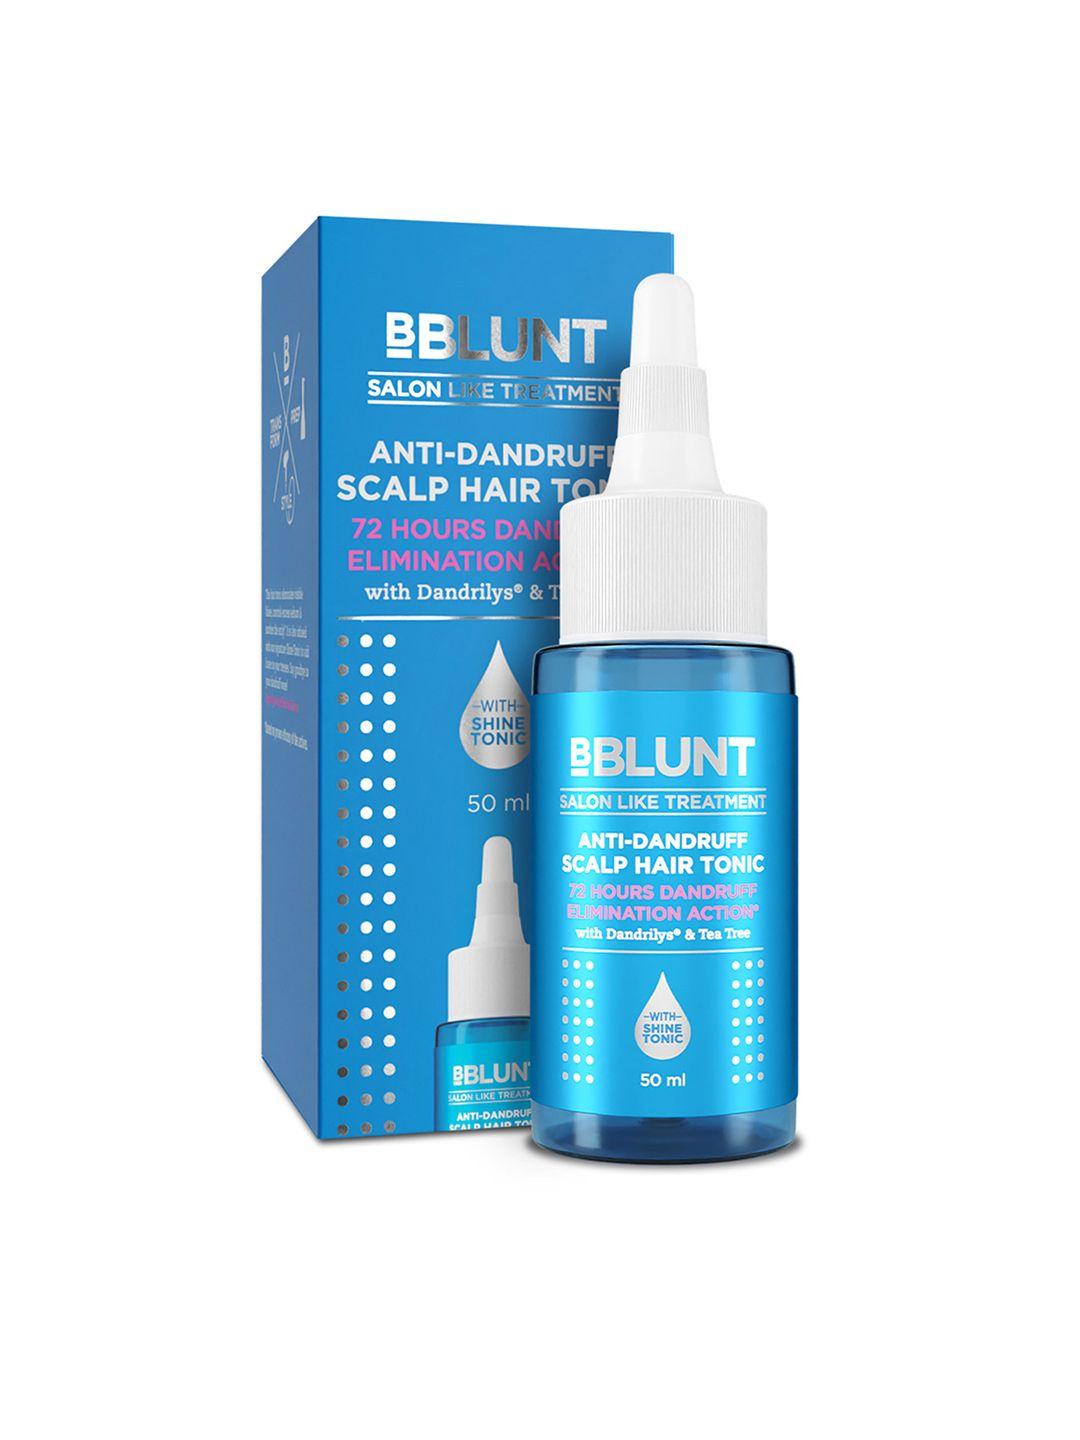 BBLUNT Salon Like Treatment Anti-Dandruff Scalp Hair Tonic with Dandrylis & Tea Tree-50 ml